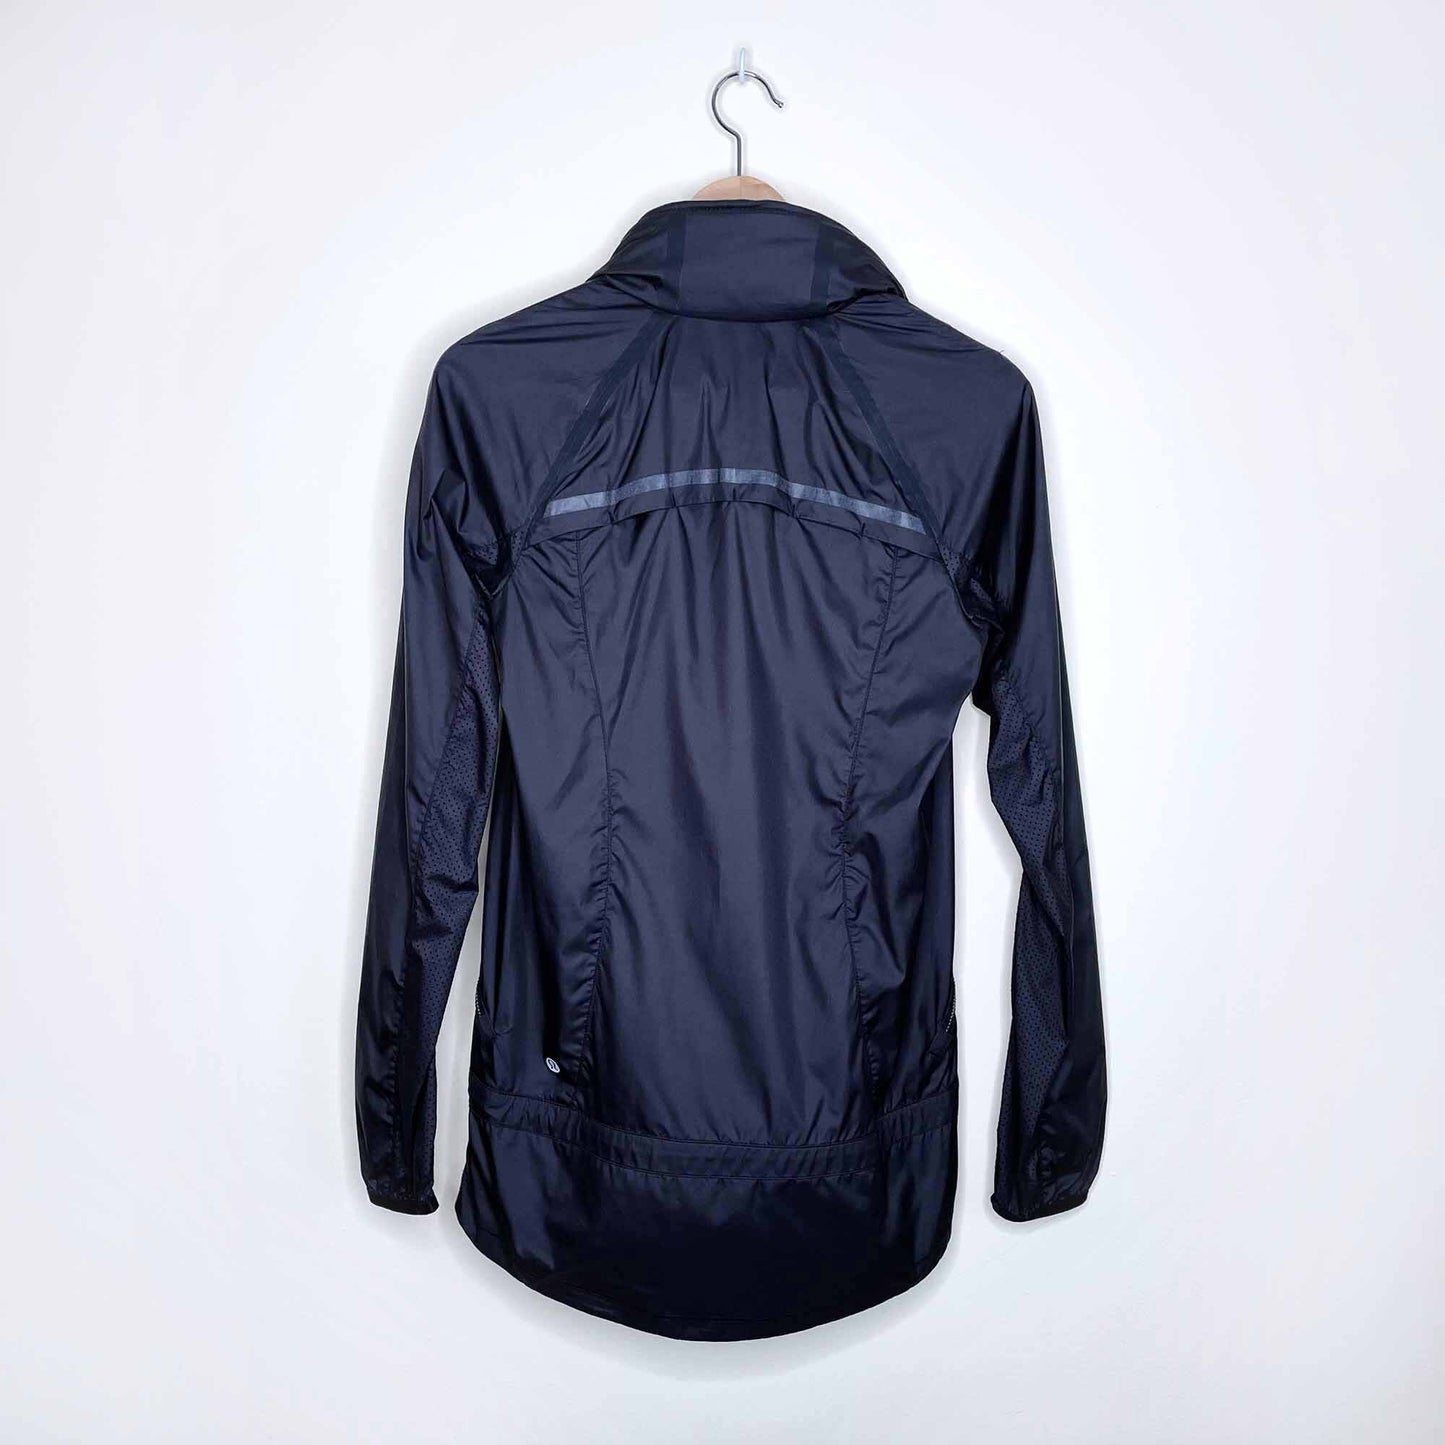 lululemon 1/4 zip light popover jacket with packable hood - size 4